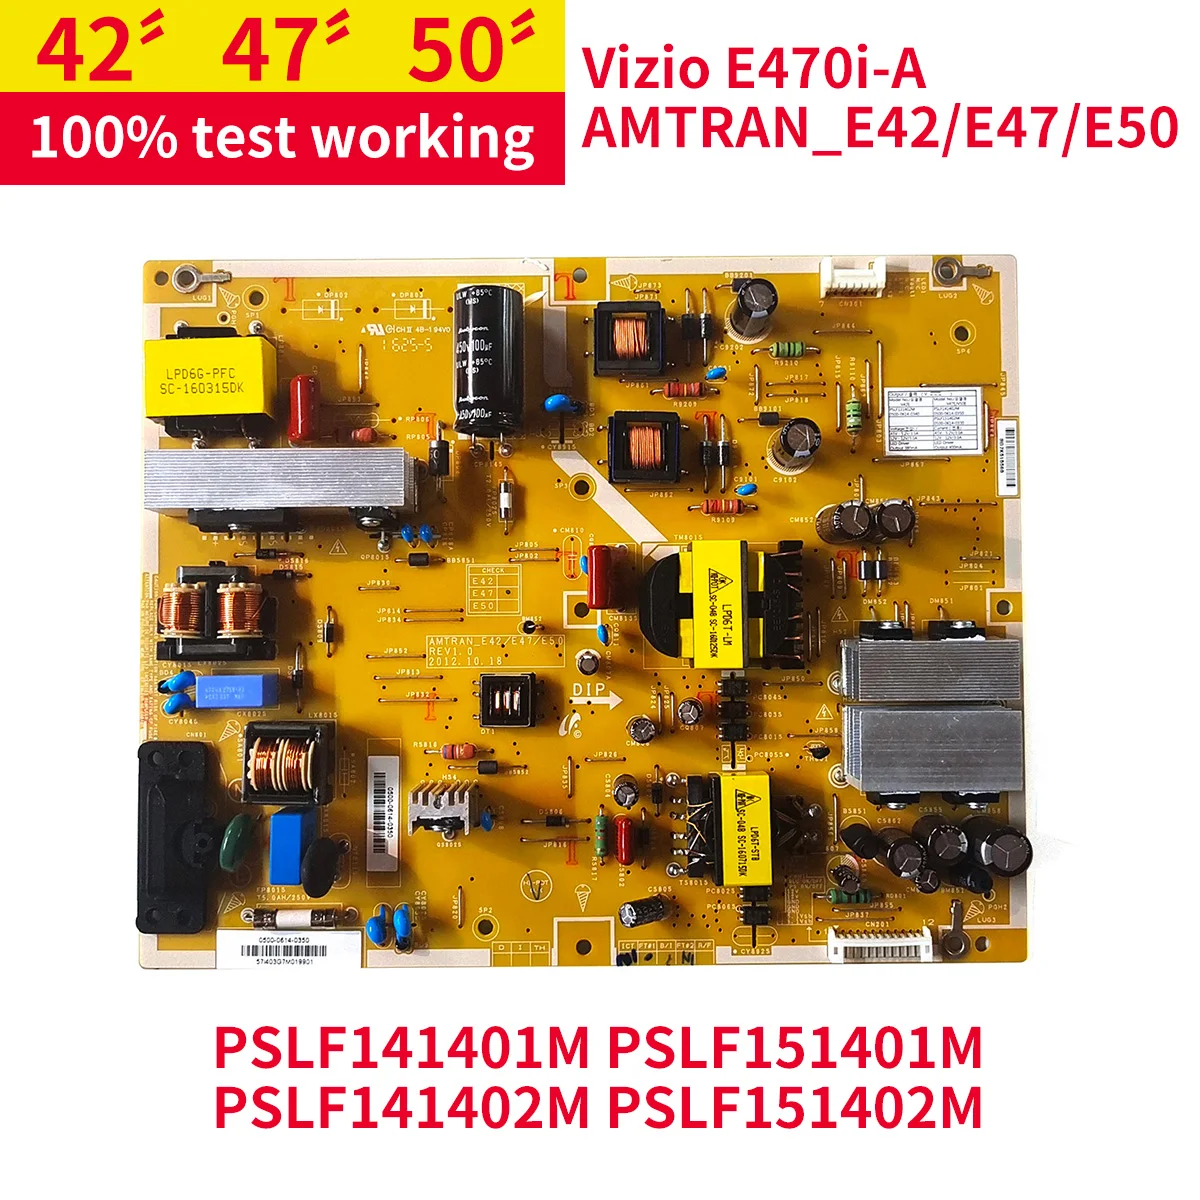 100% New Test Working Power Board Good Quality for Vizio E470i-A PSLF141402M PSLF131402M AMTRAN_E42 E47 E50 0500-0614-0340